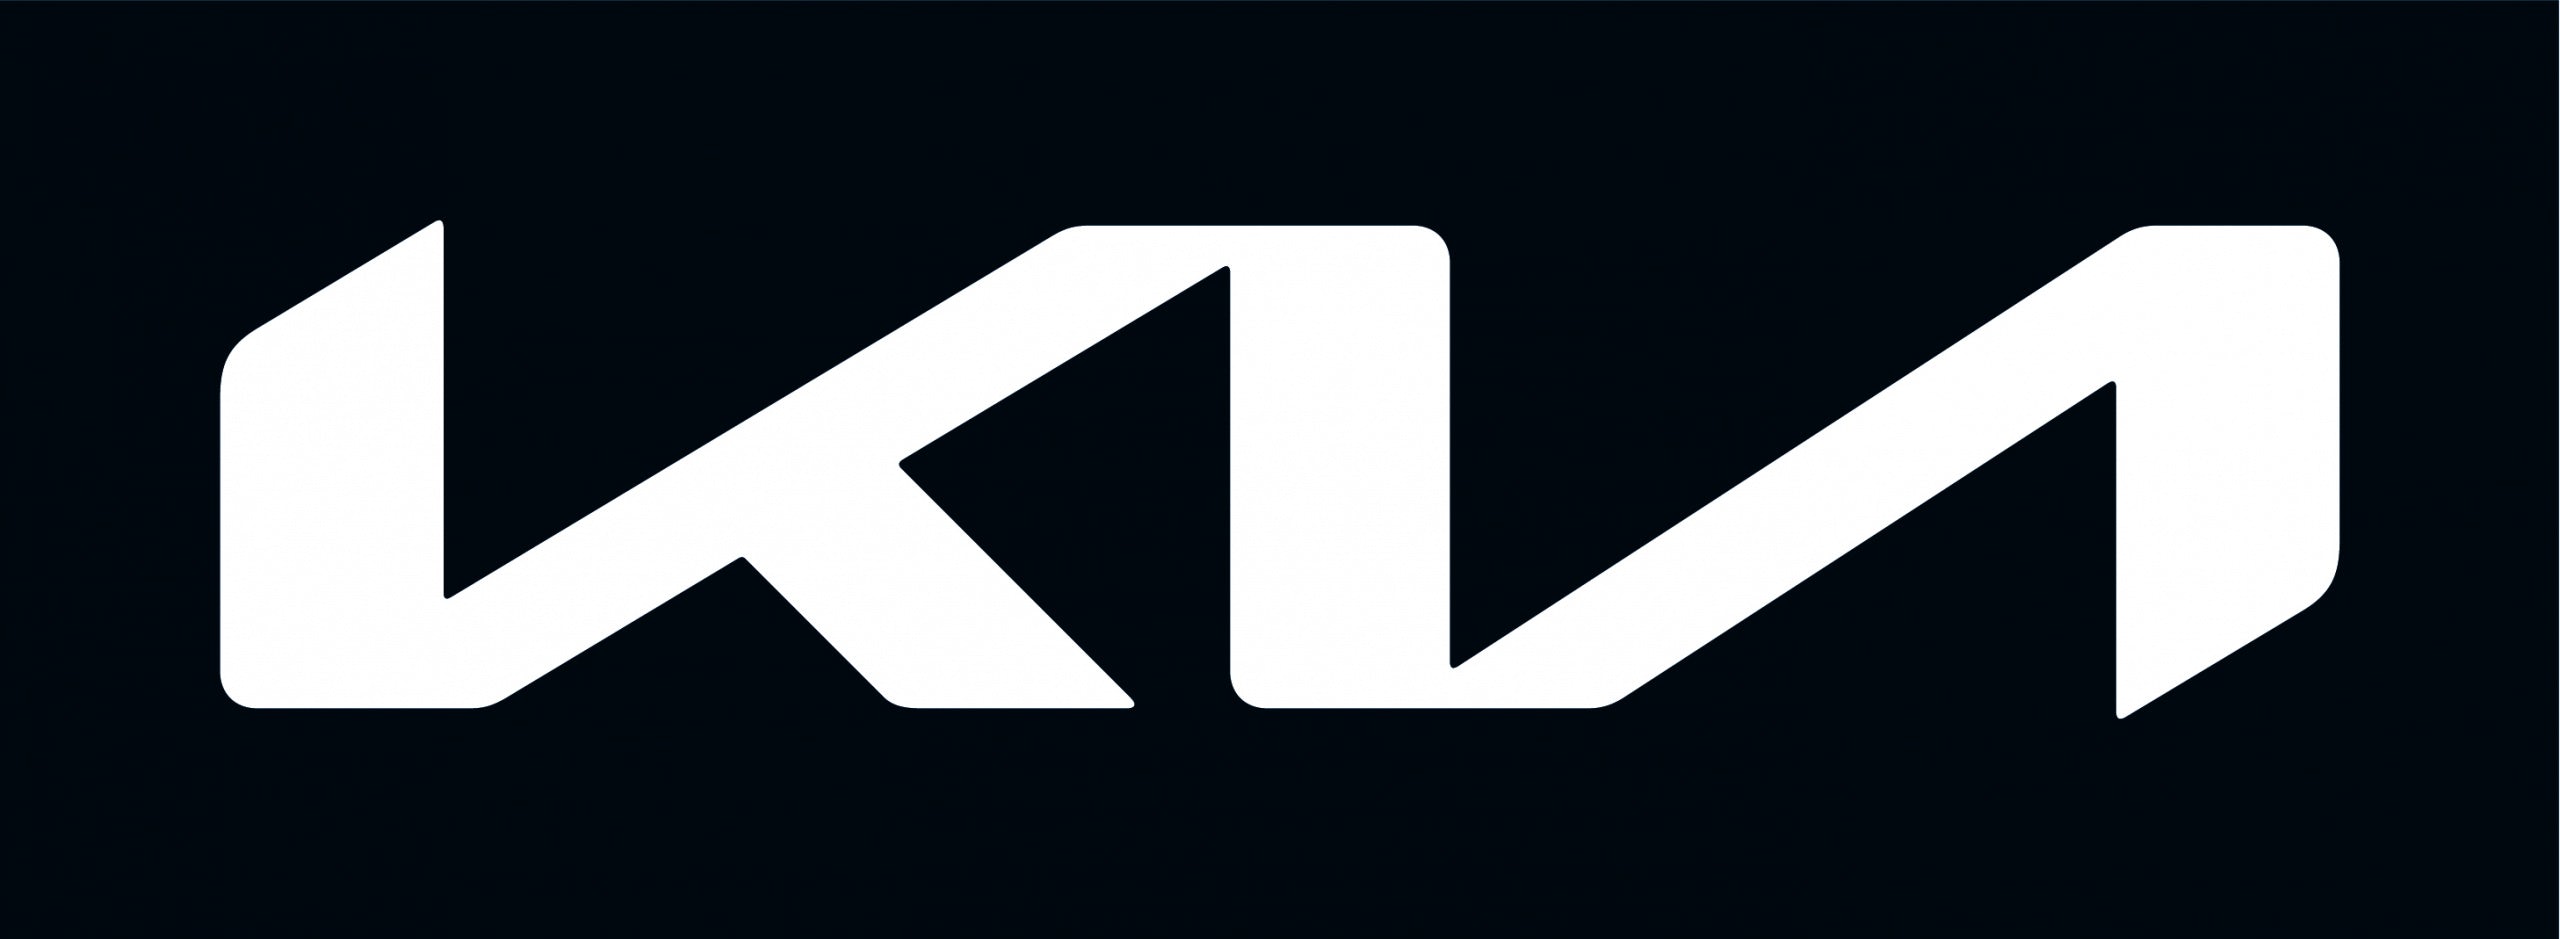 Kia unveils a new signature-inspired logo